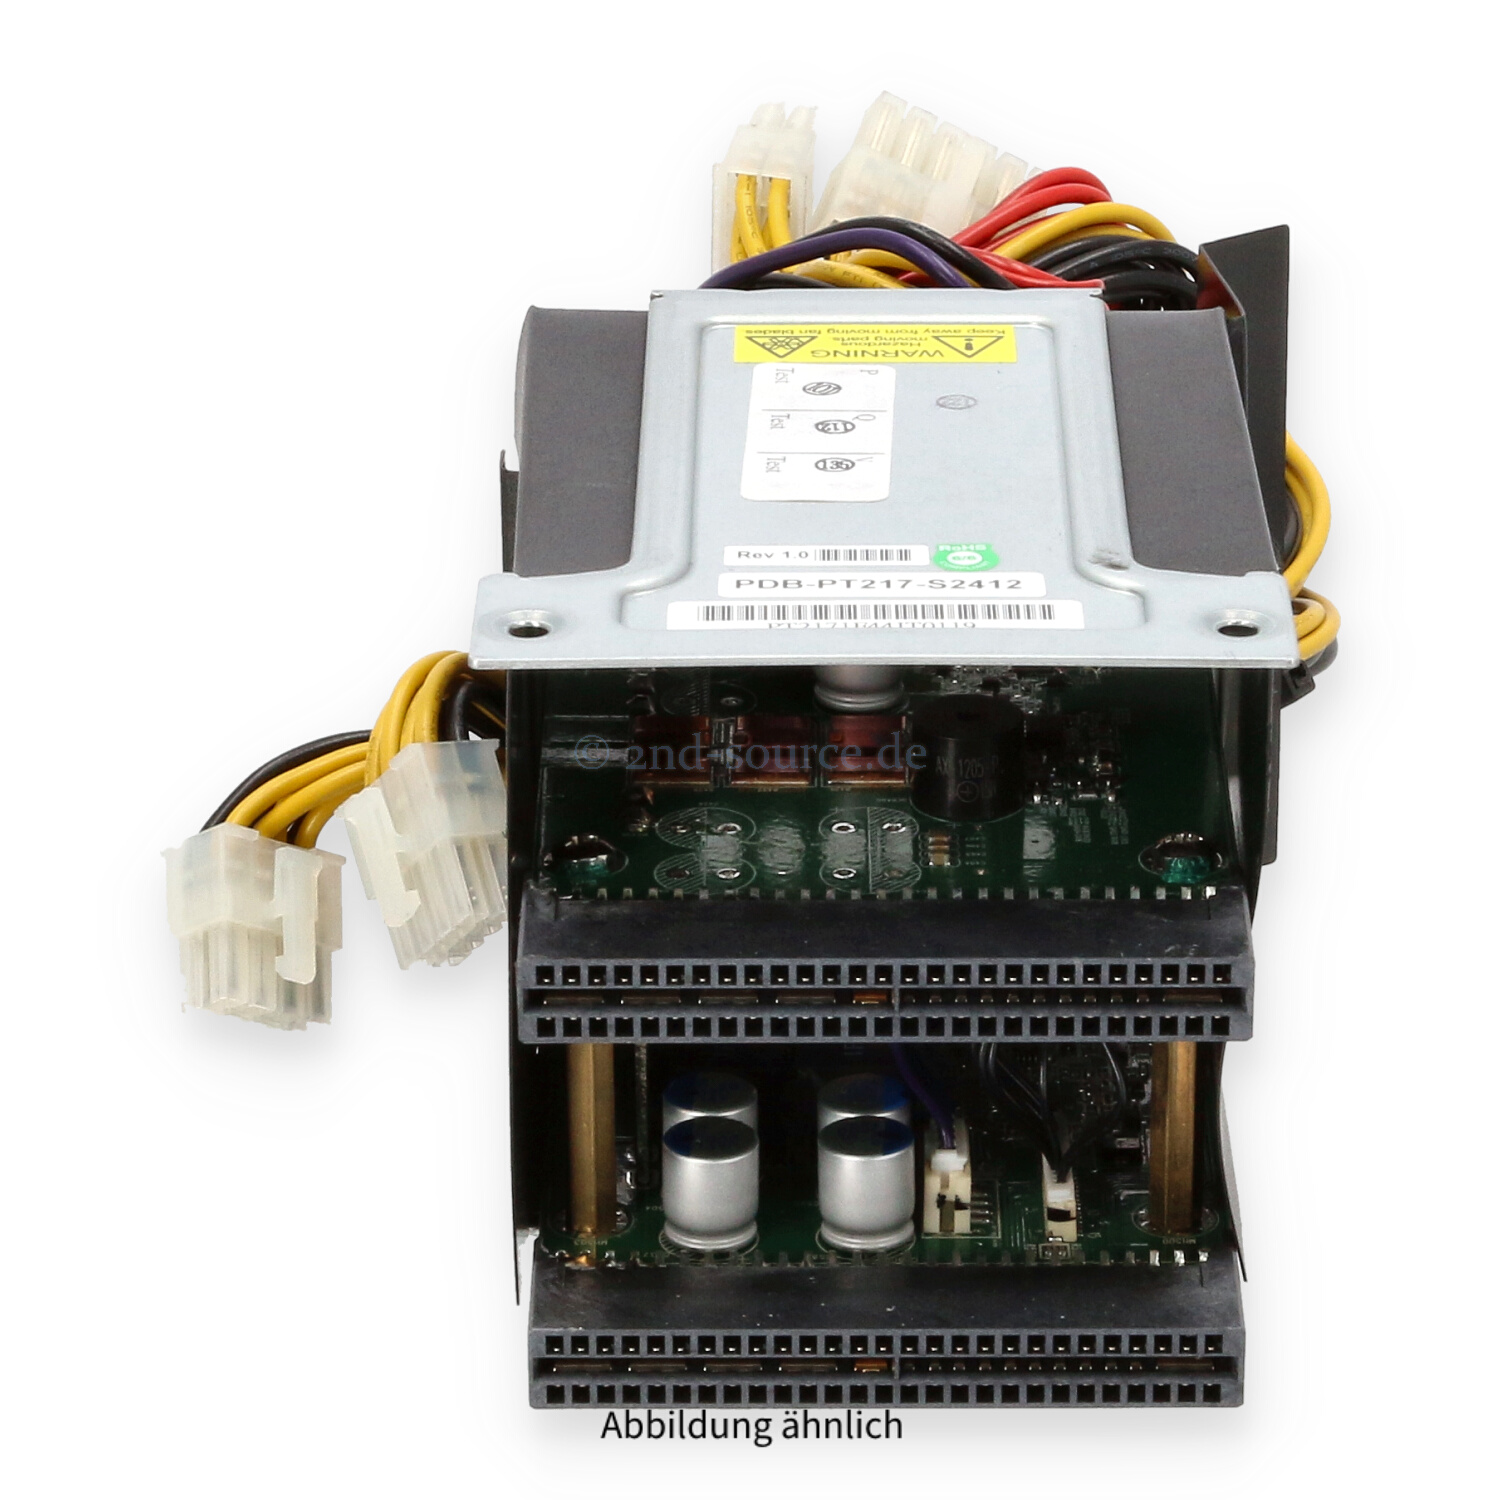 Supermicro SC217 Power Distribution Board PDB-PT217-S2412